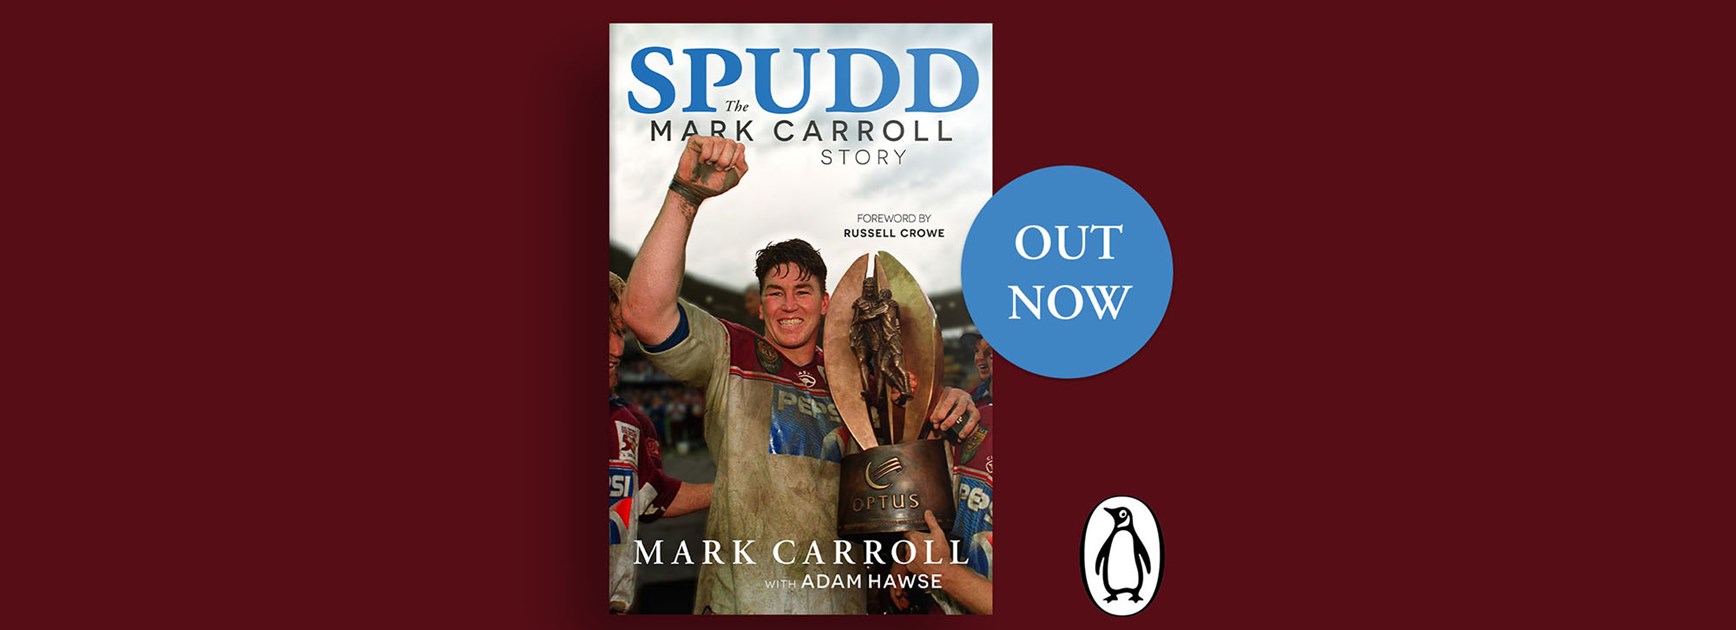 Spudd - The Mark Carroll Story - Now on sale